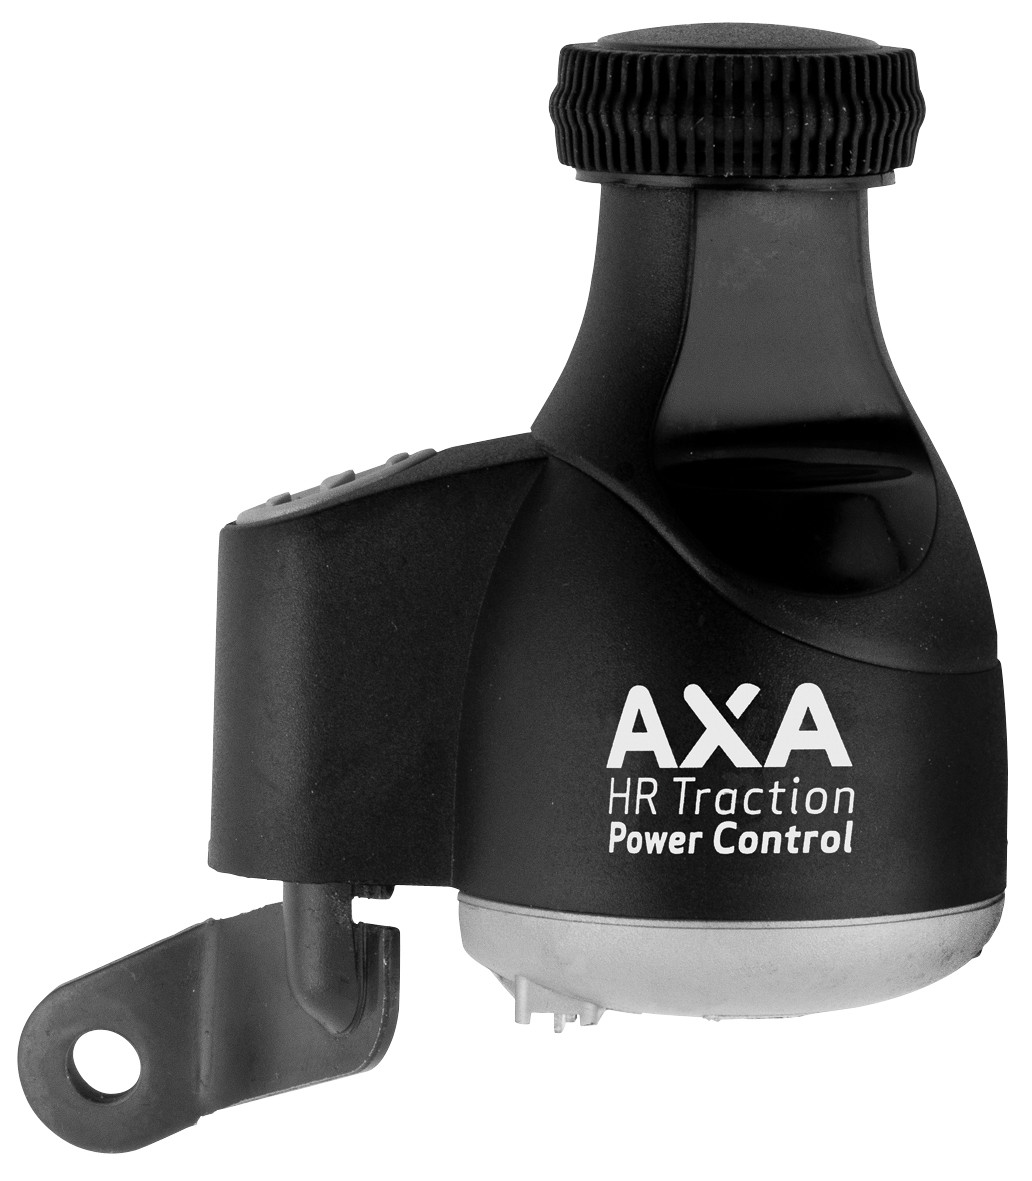 AXA Fahrraddynamo HR Traction, rechts, schwarz - Bild 1